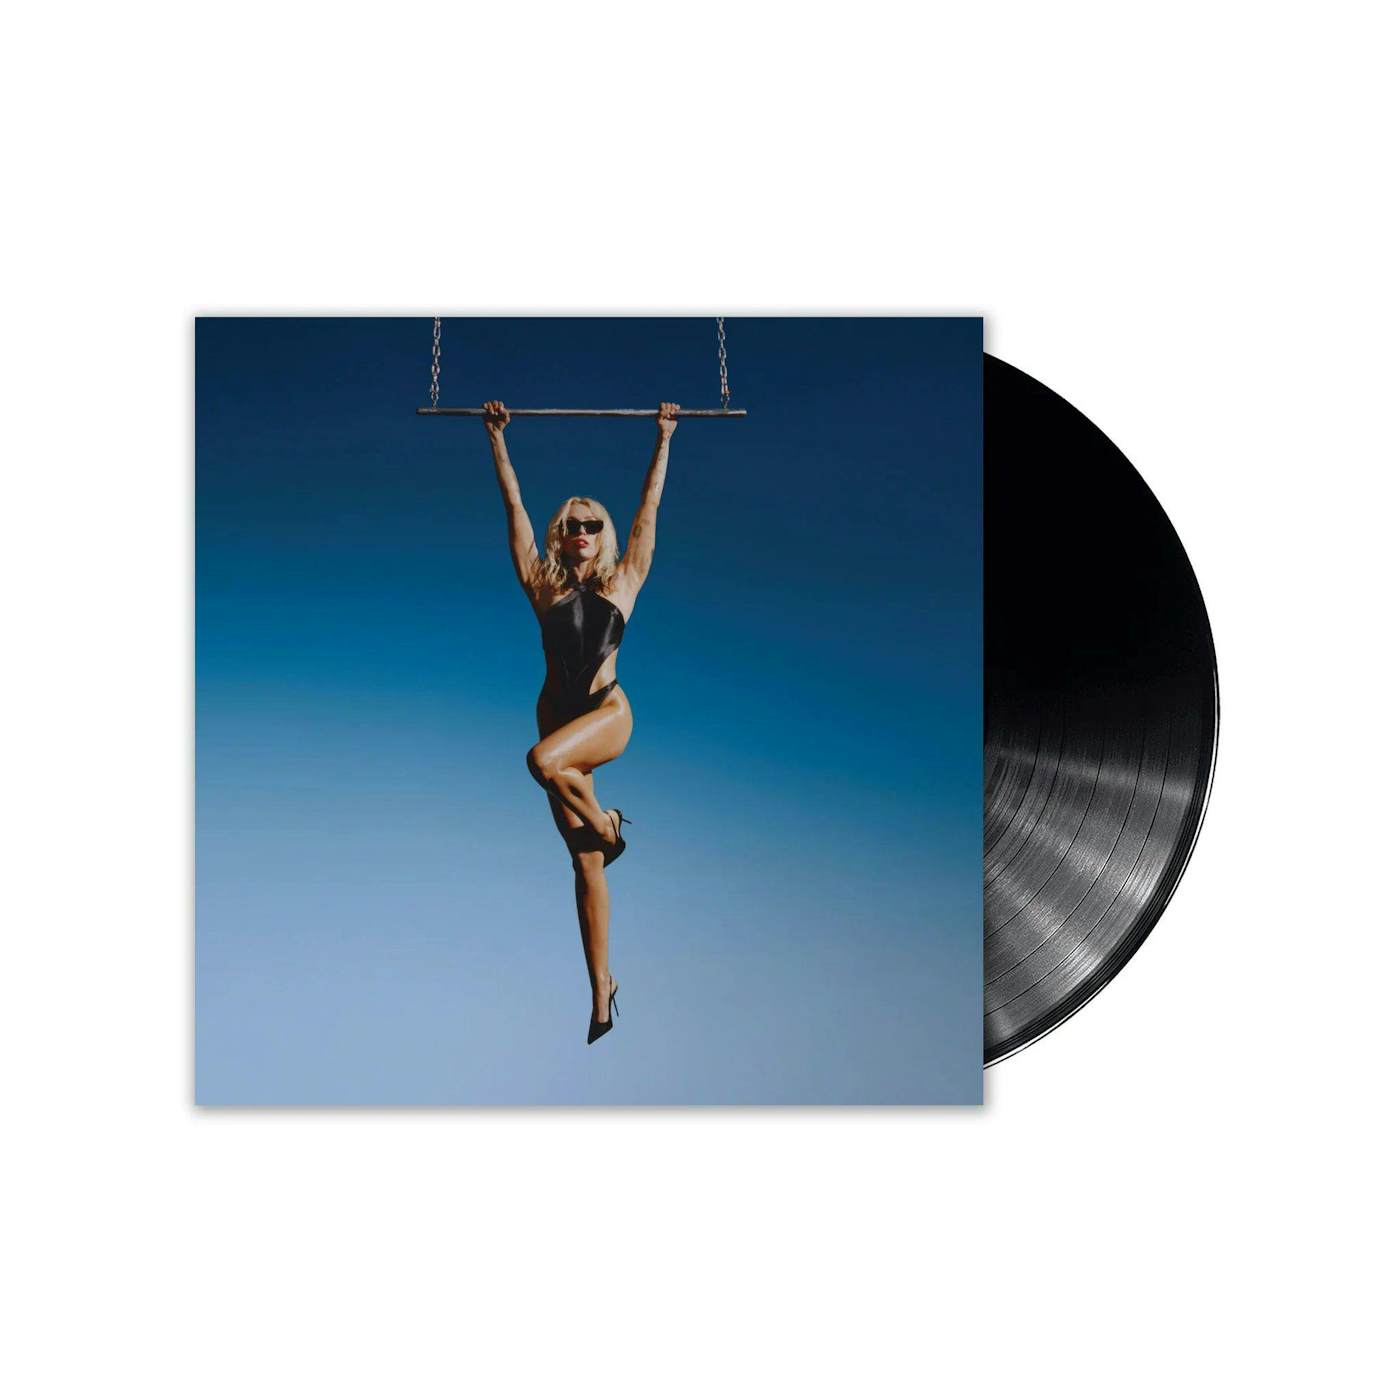 Miley Cyrus Endless Summer Vacation (Explicit Content/Booklet/Gatefold LP Jacket/Poster) Vinyl Record